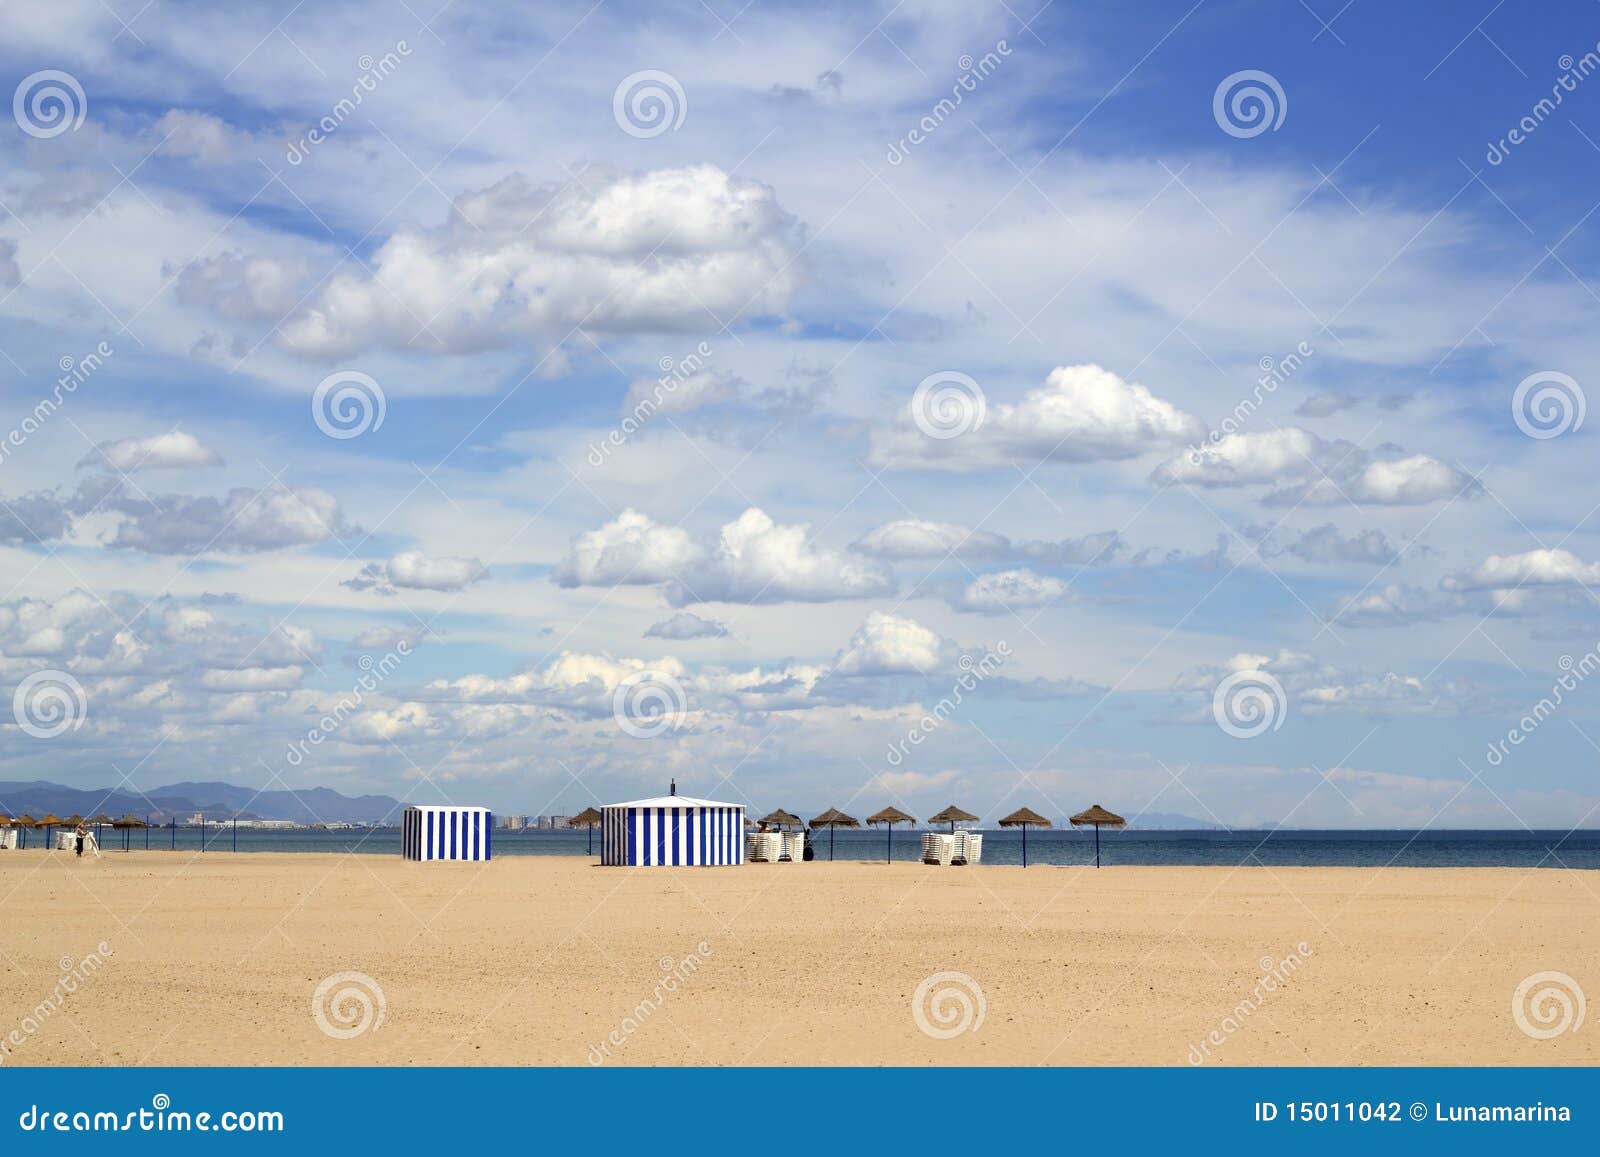 malvarrosa sand beach in valencia spain blue sky